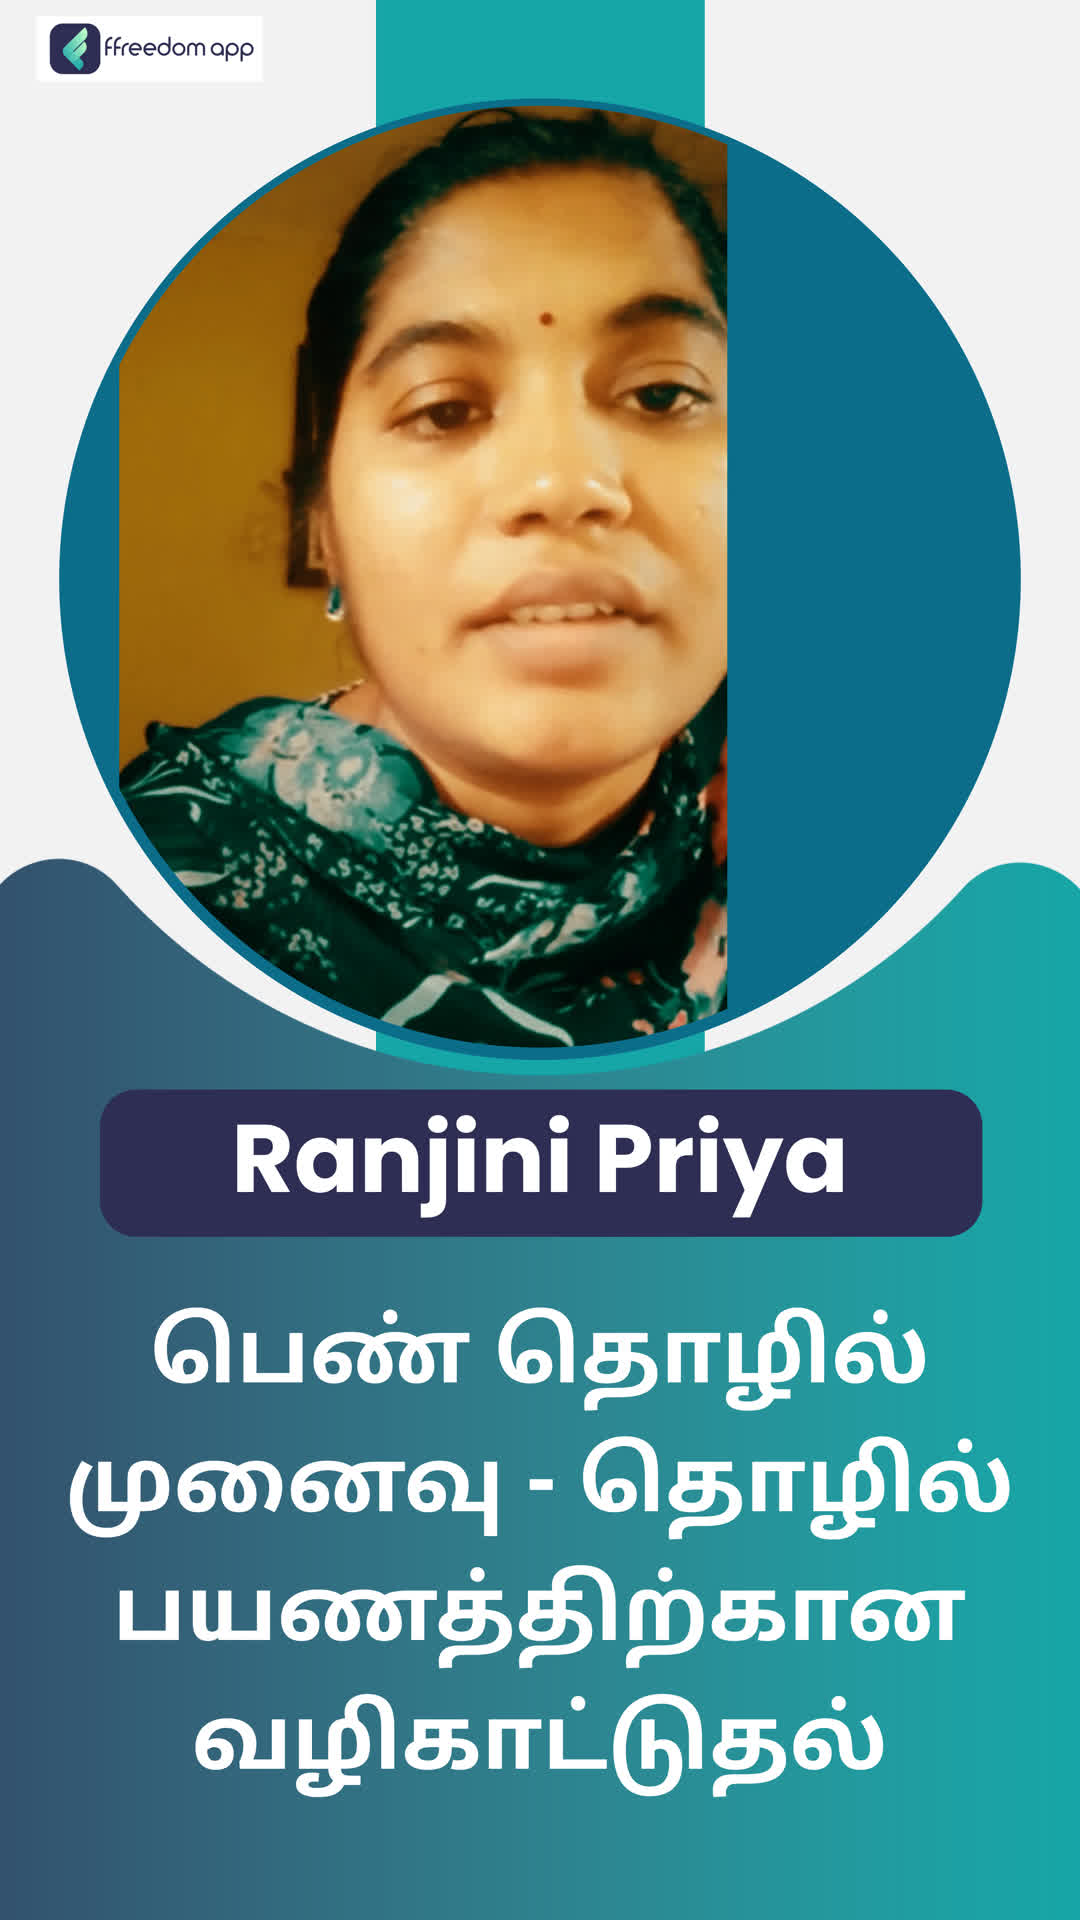 Ranjini Priya's Honest Review of ffreedom app - Tiruvannamalai ,Tamil Nadu